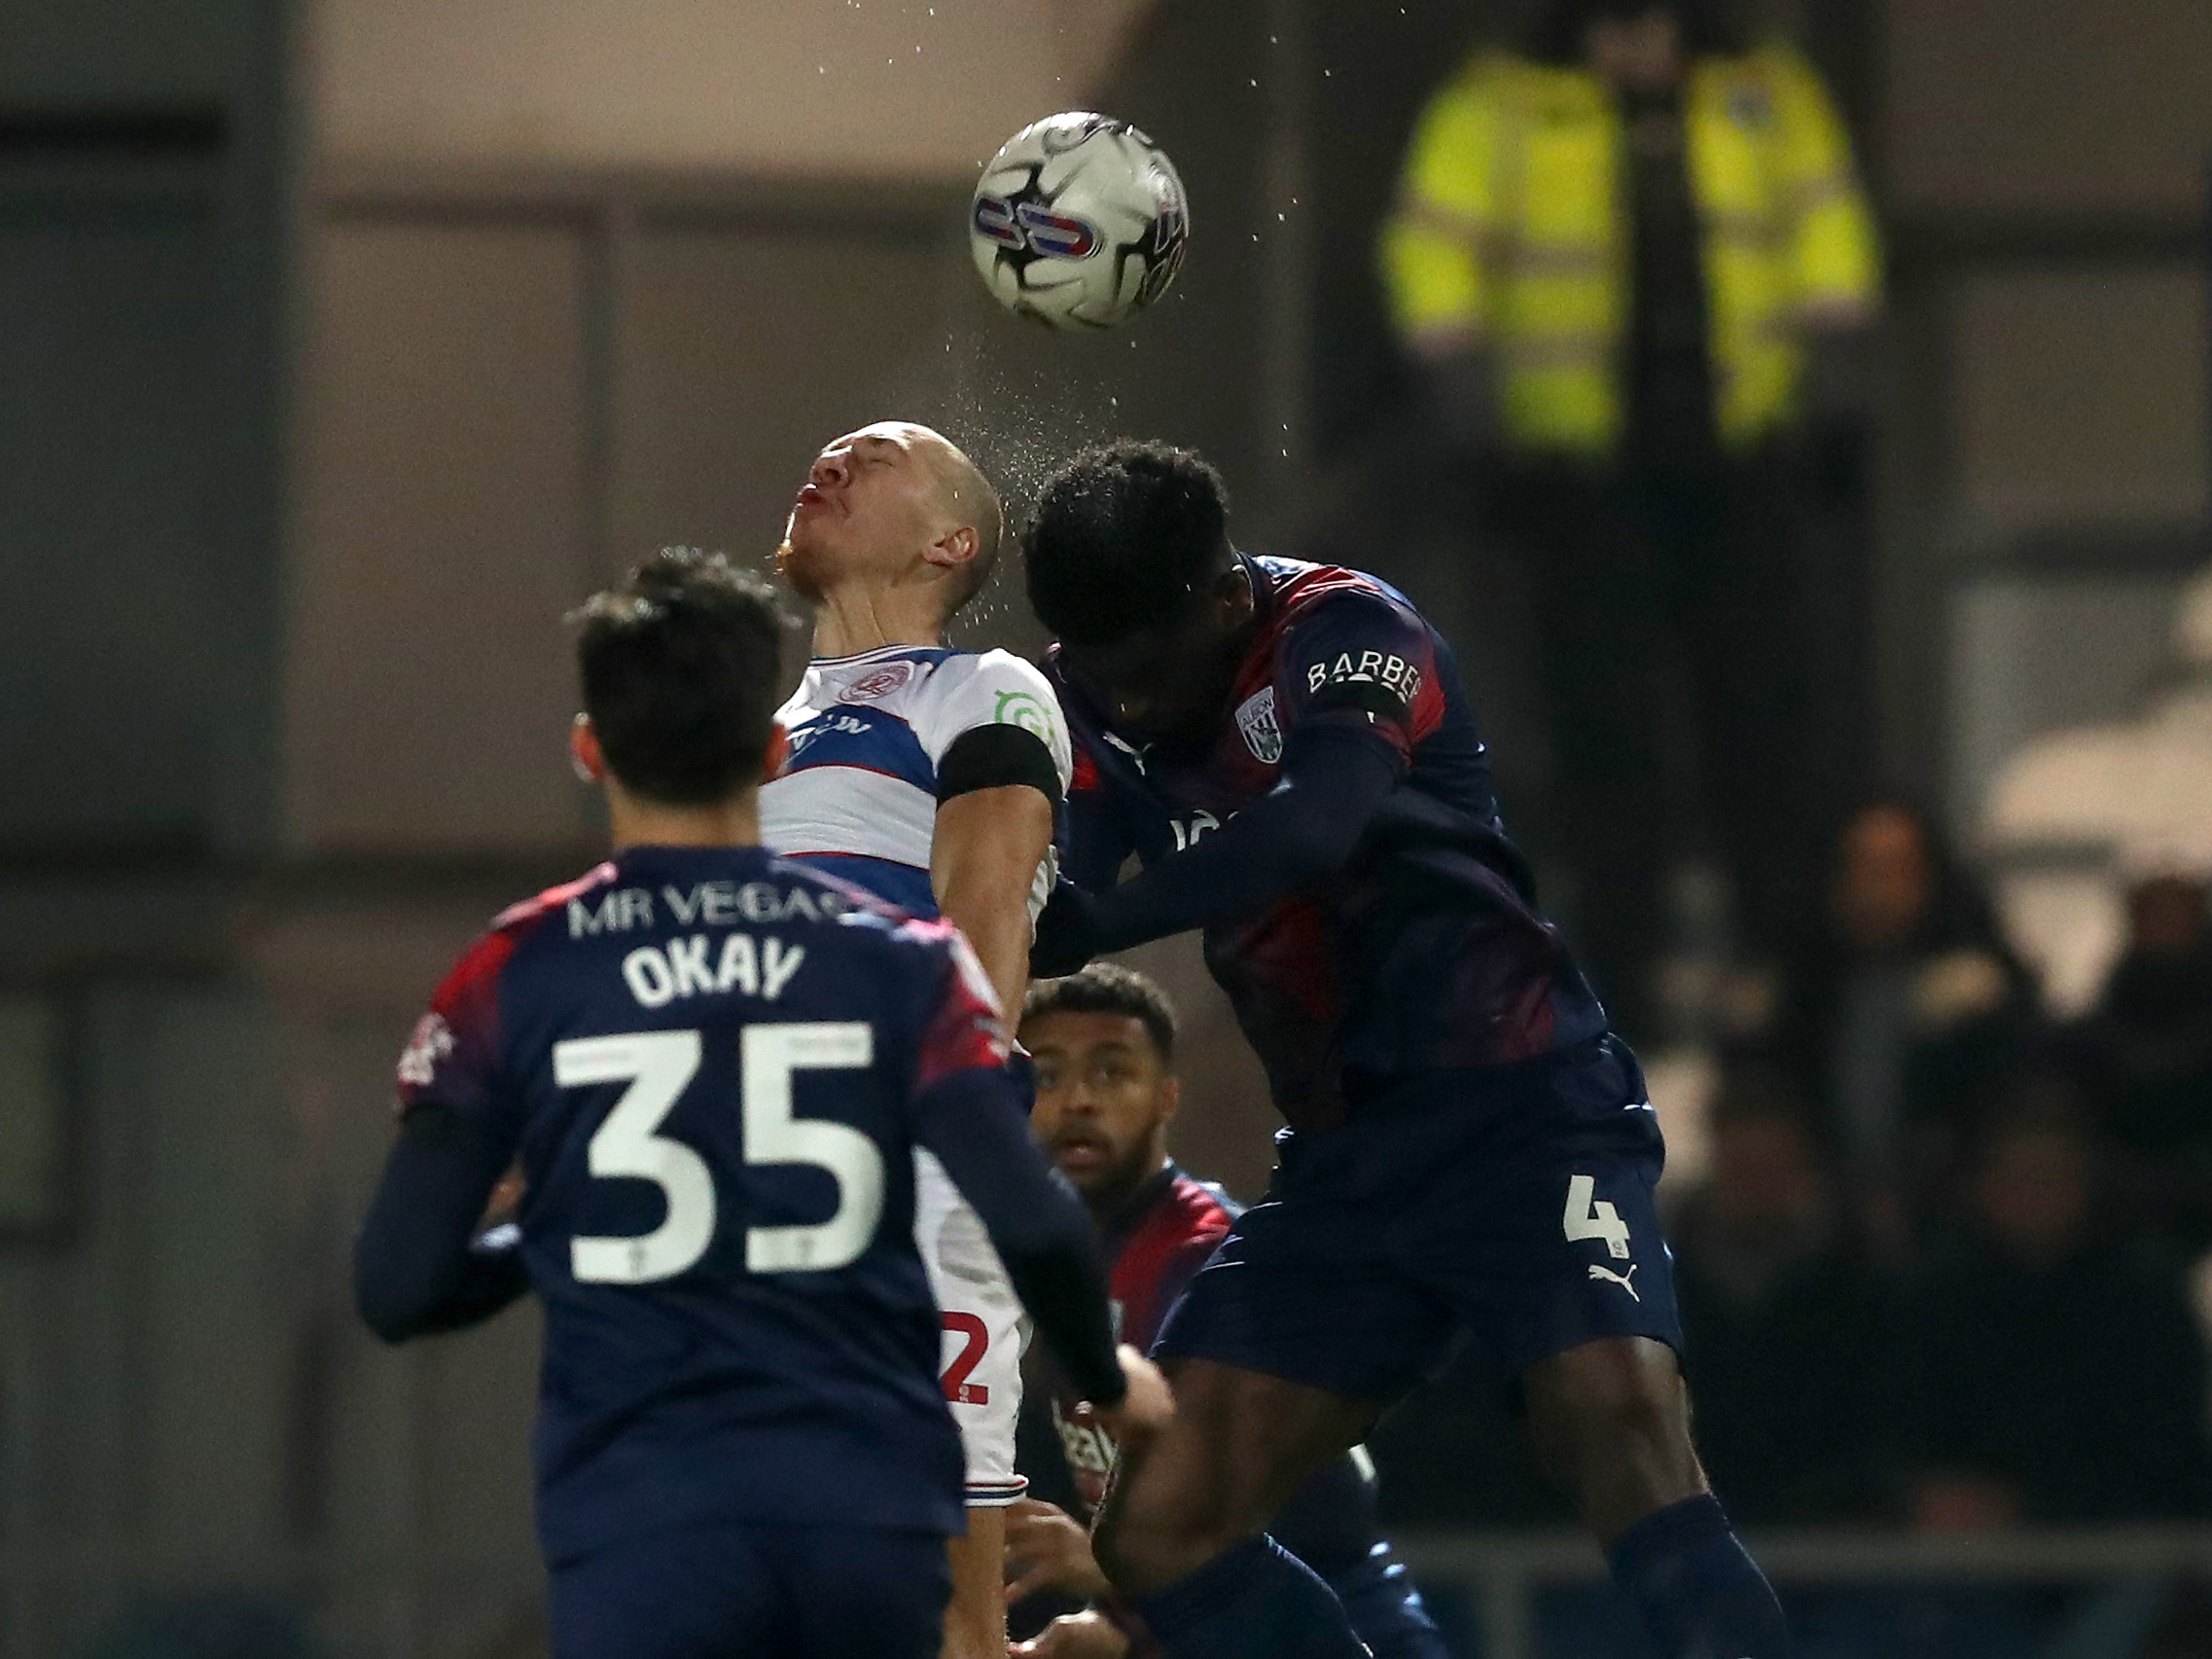 Cedric Kipre jumps for the ball against a QPR player